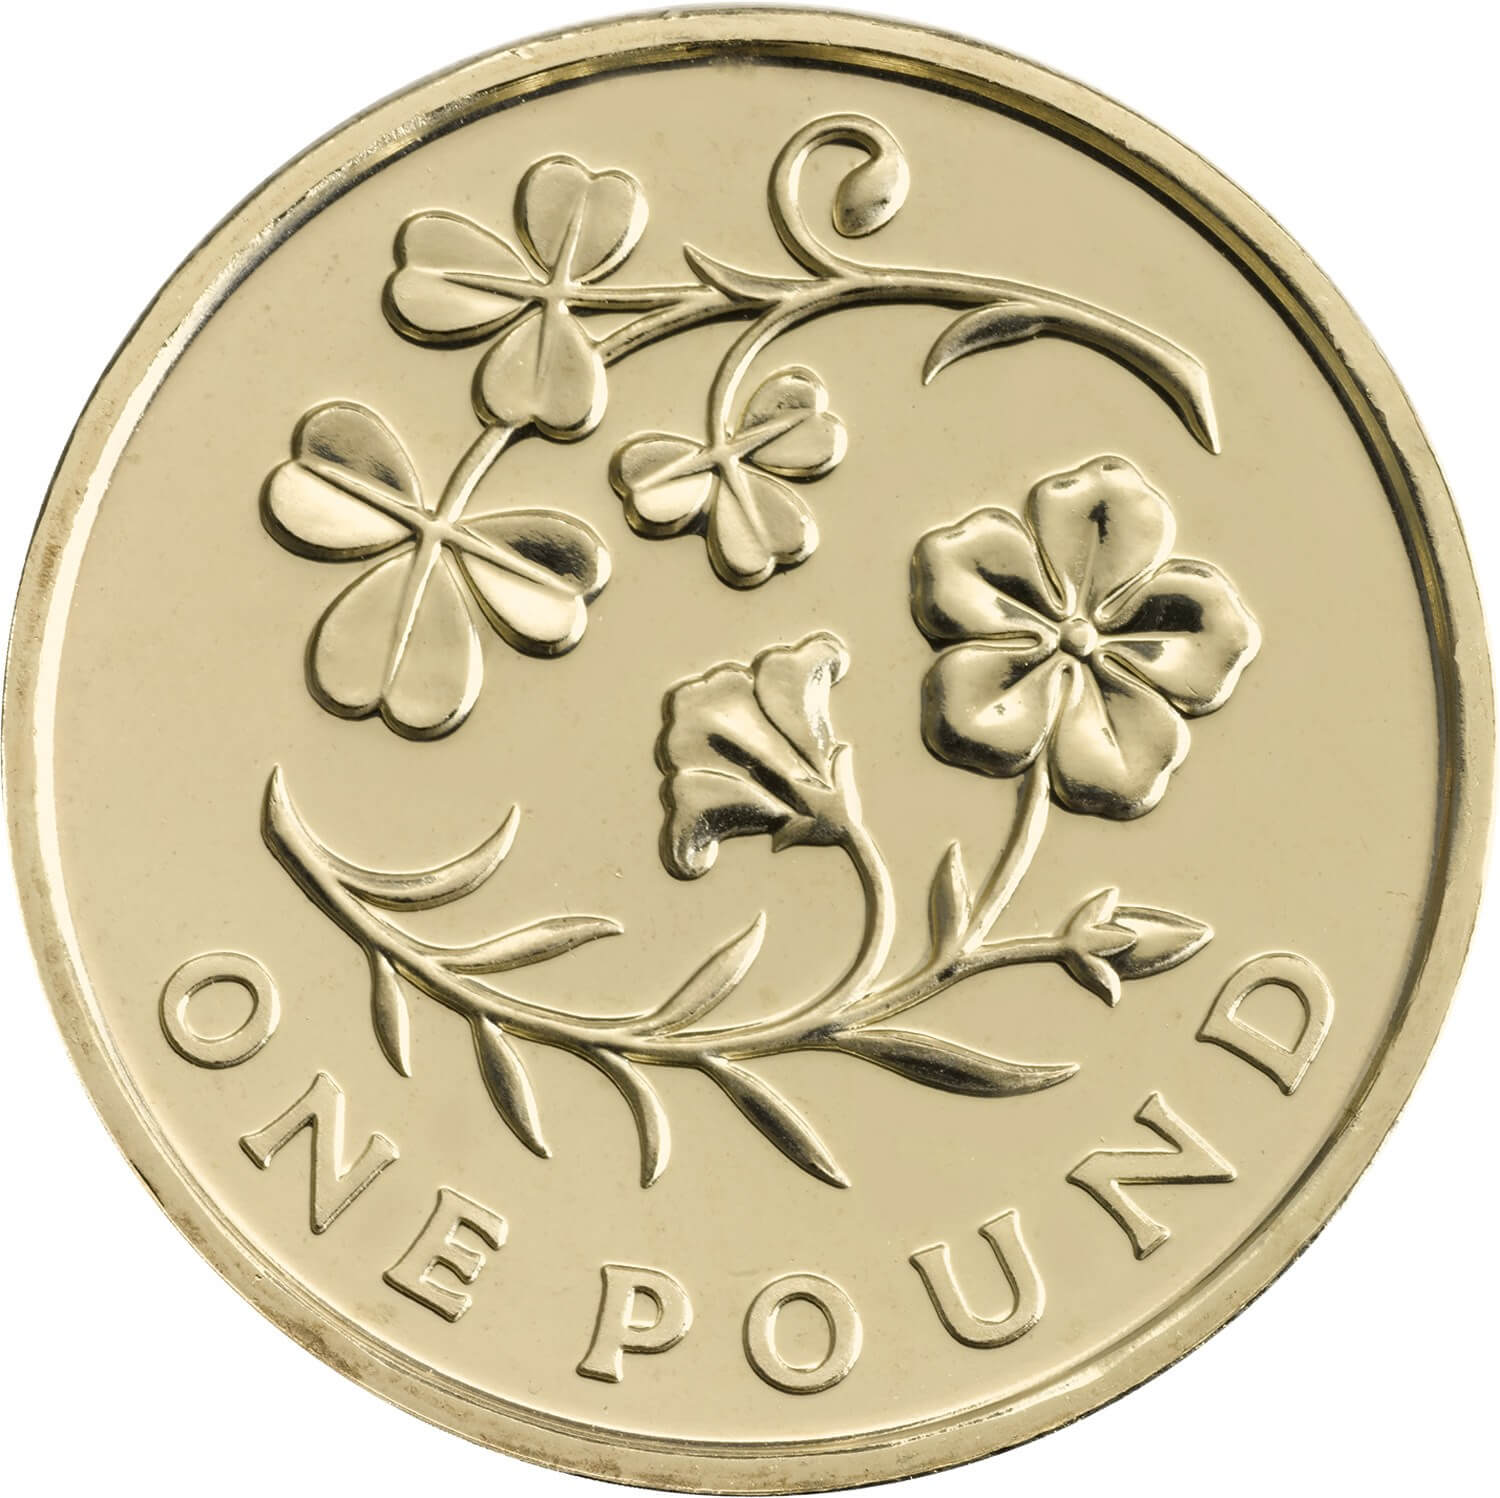 2014-nireland-one-pound_rev-coin.jpg